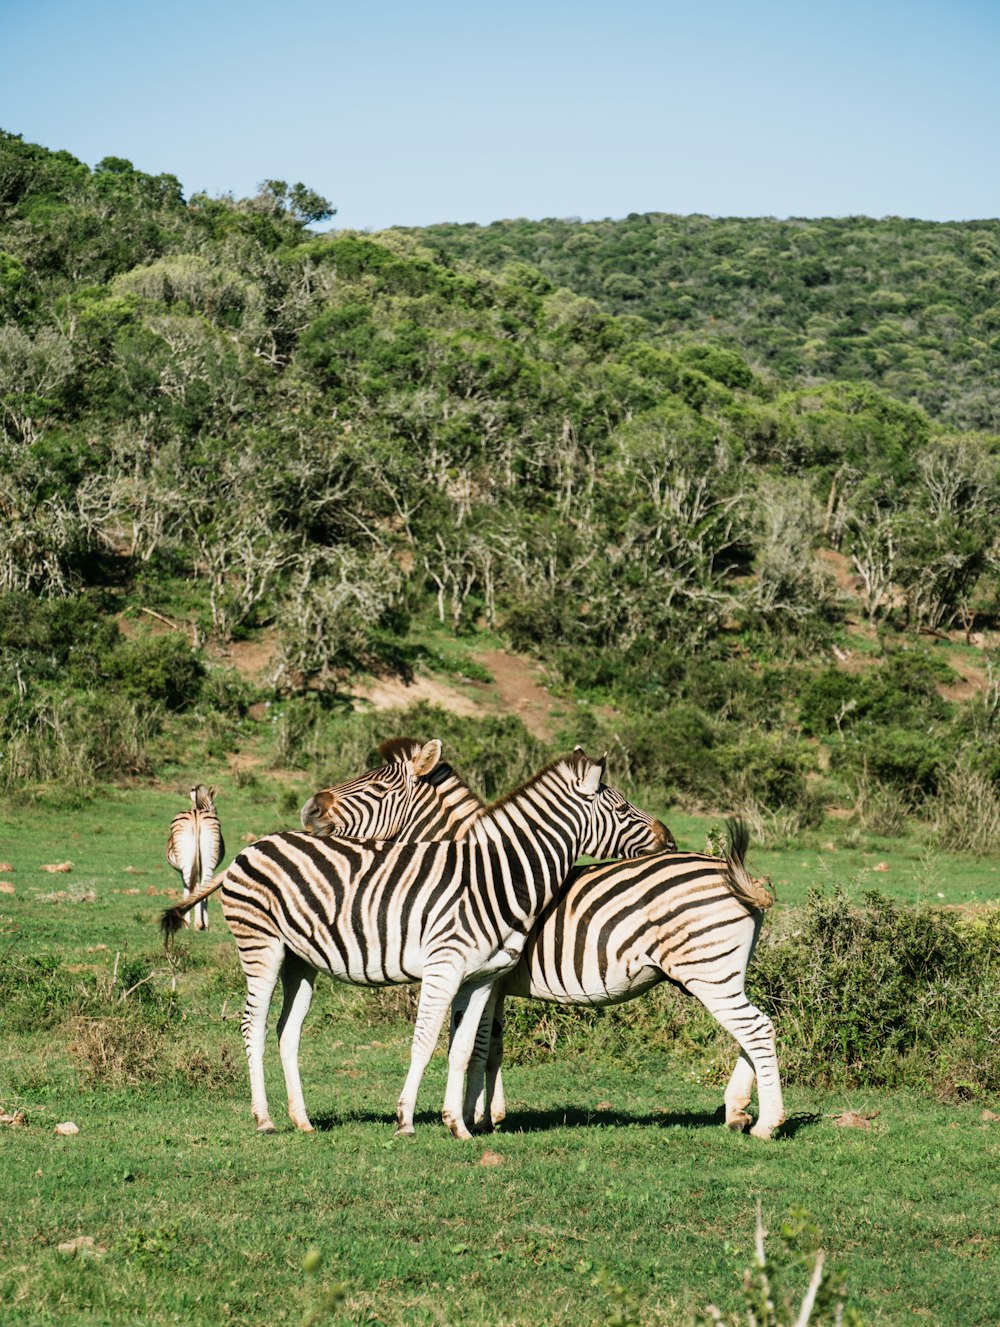 zebras standing in grass